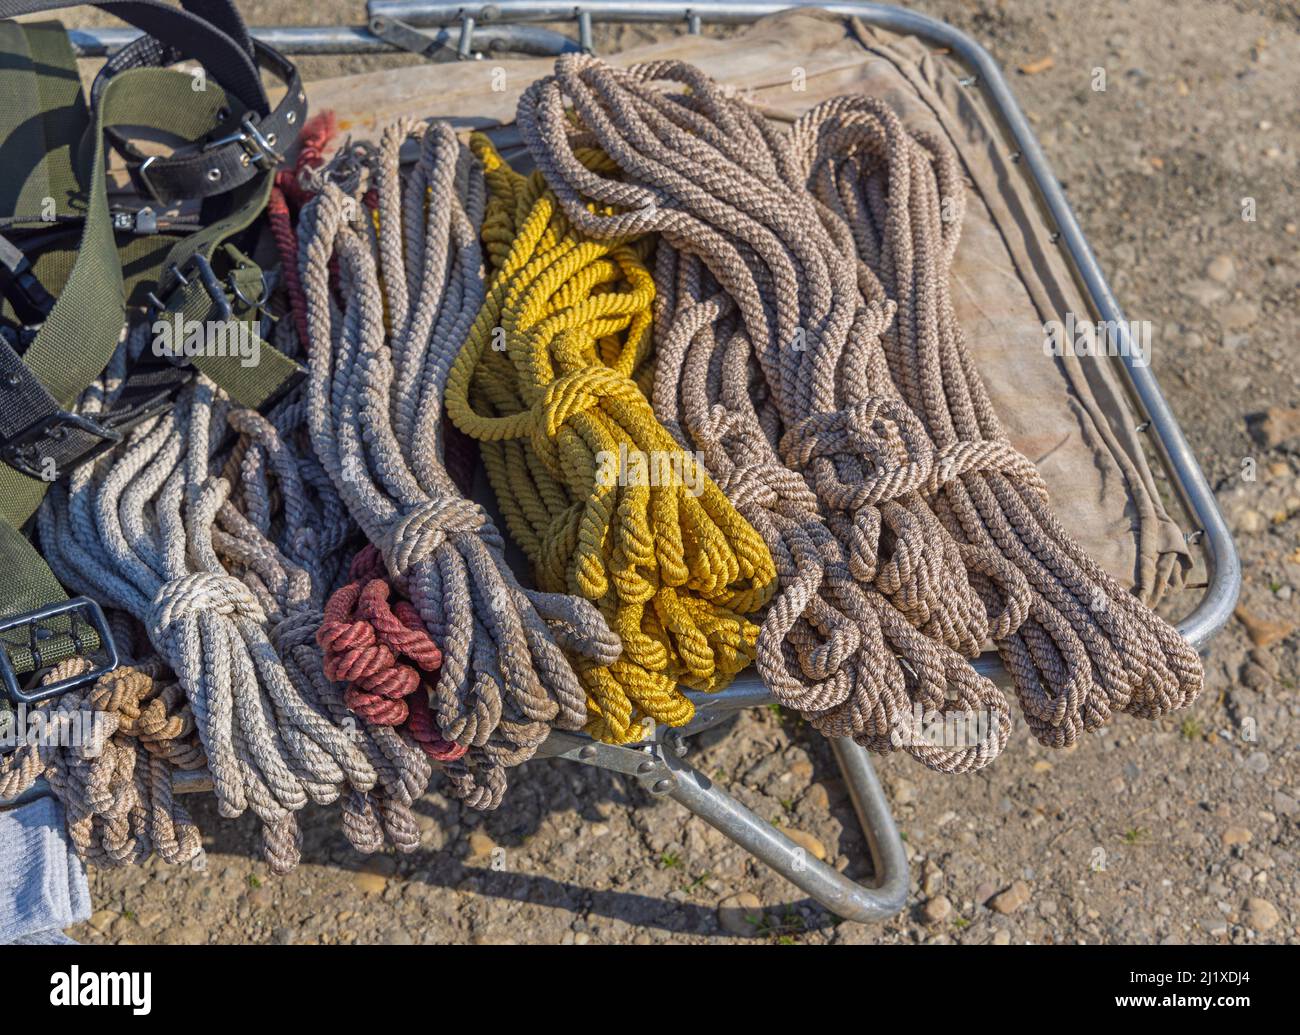 Thick Ropes Yarns Fibers Cords Camping Equipment Stock Photo